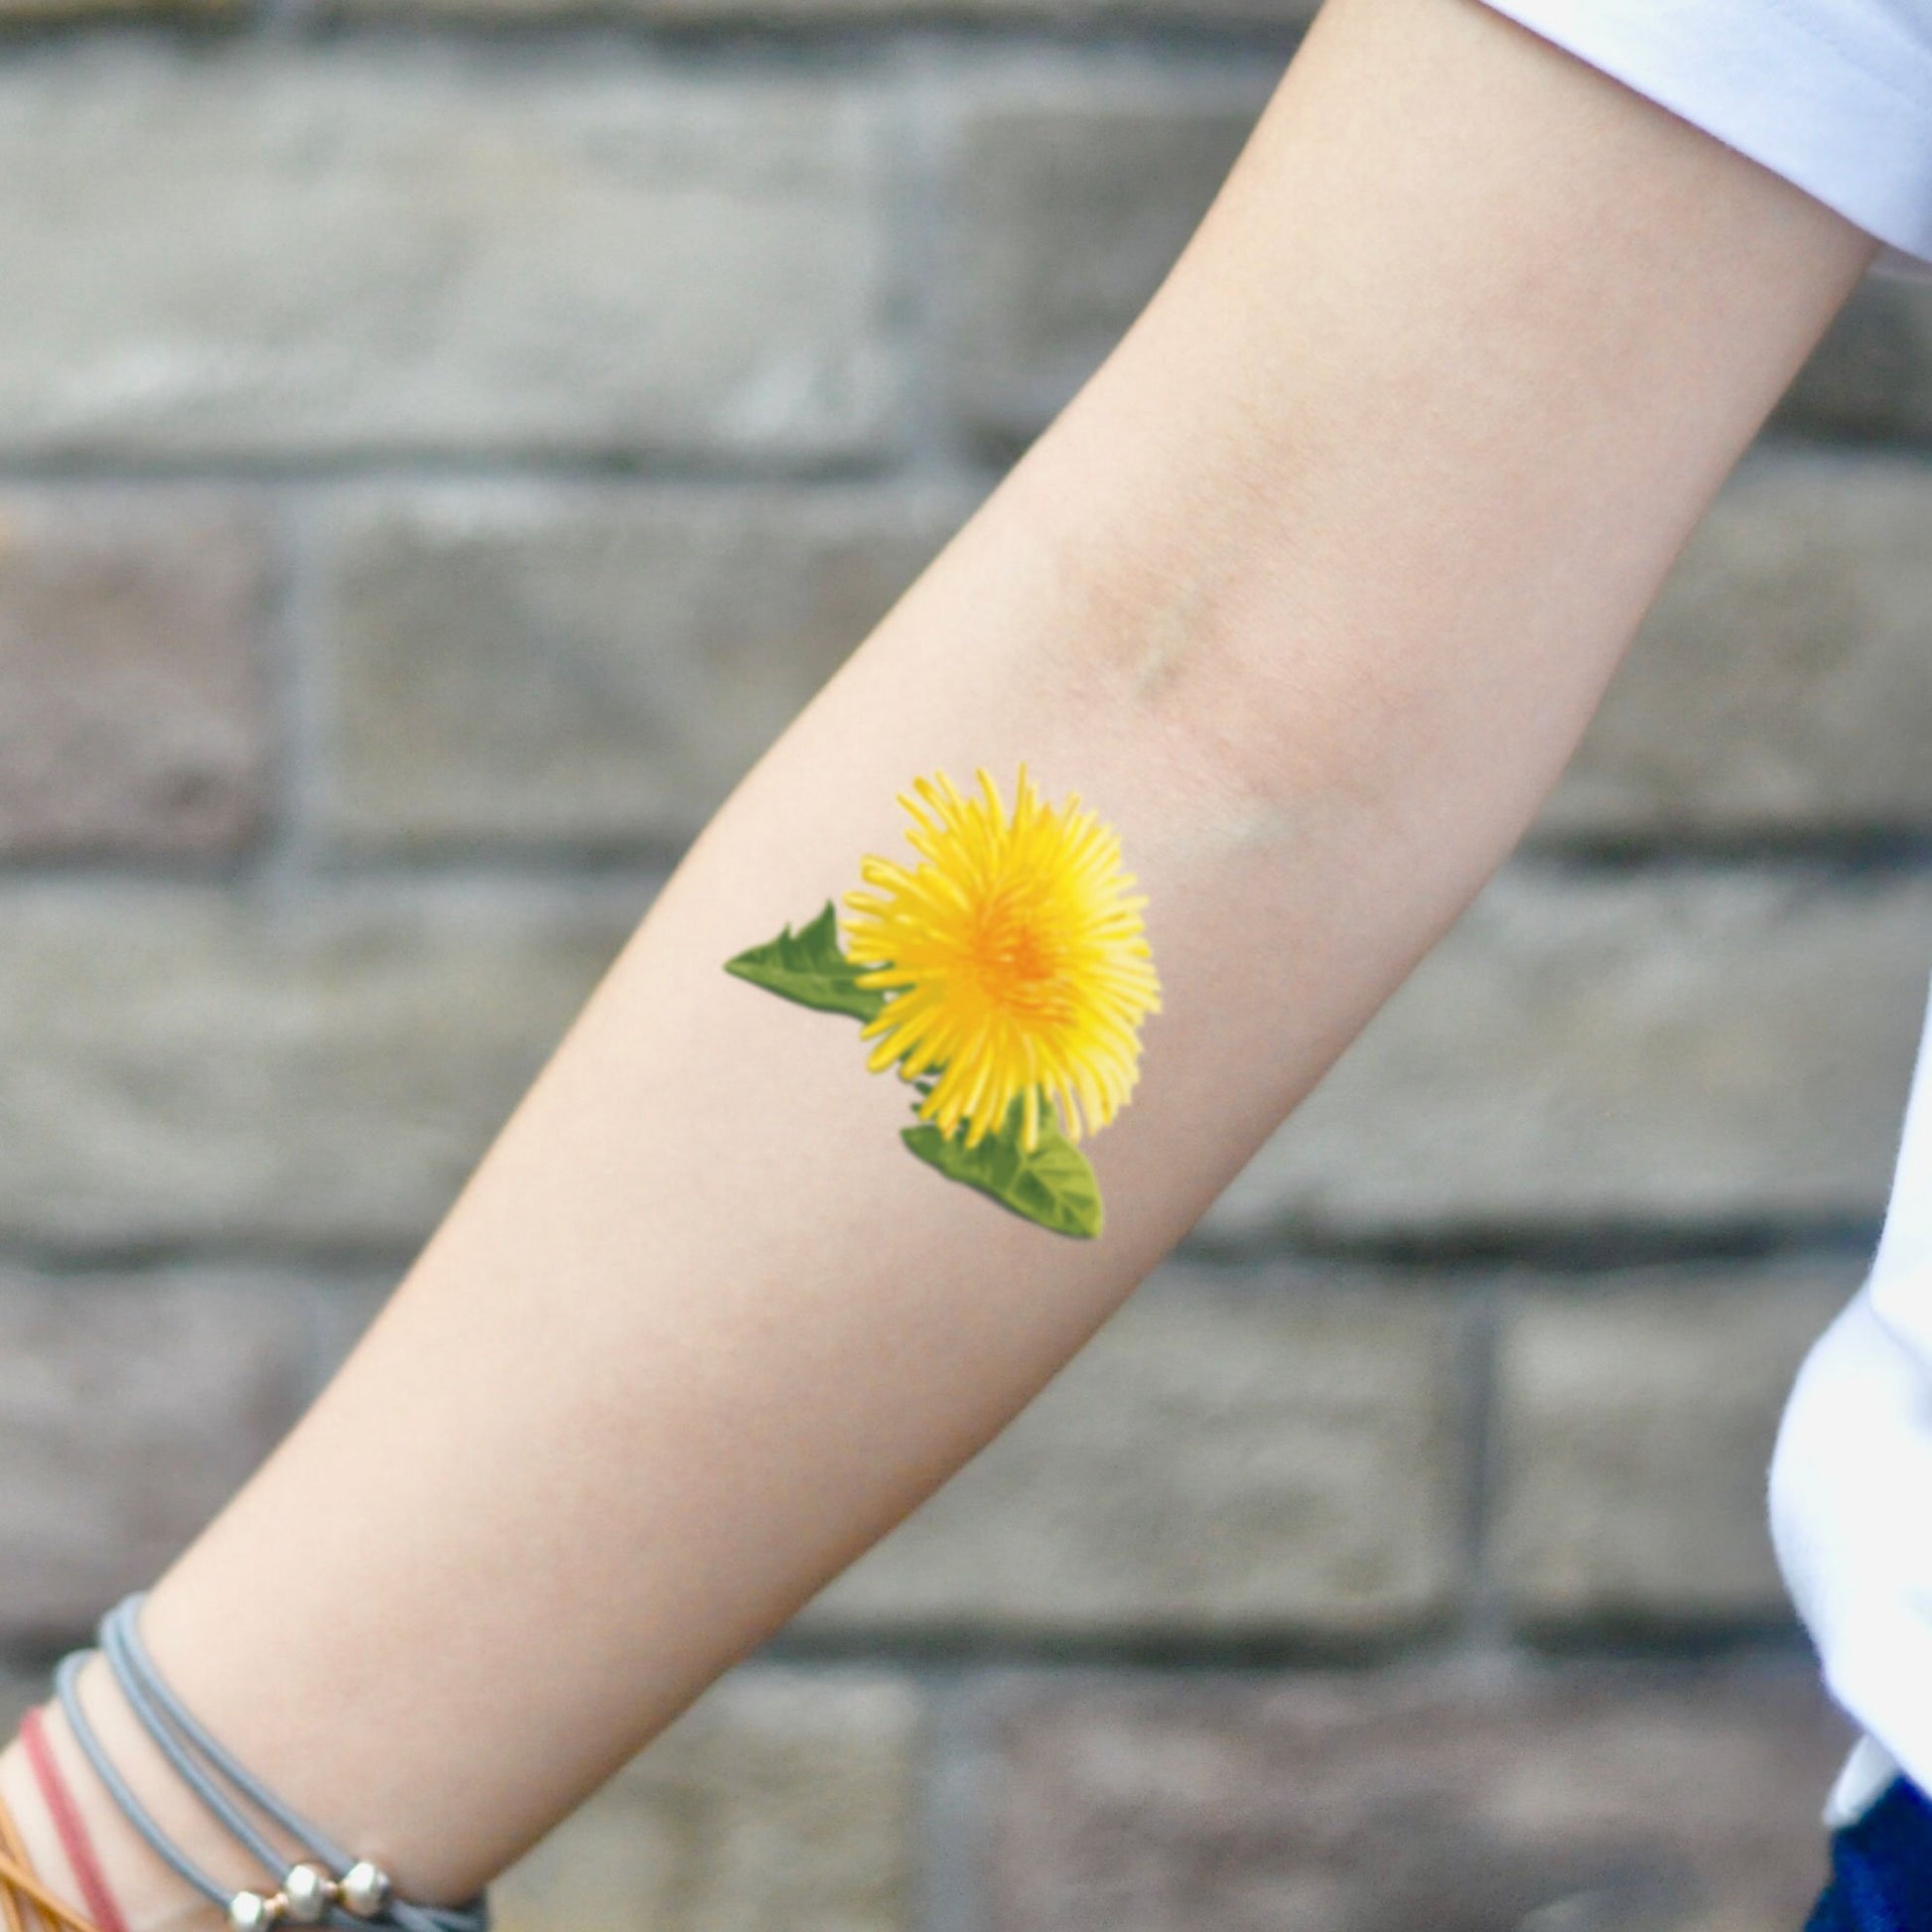 fake small yellow dandelion minimalist simple watercolor flower temporary tattoo sticker design idea on inner arm